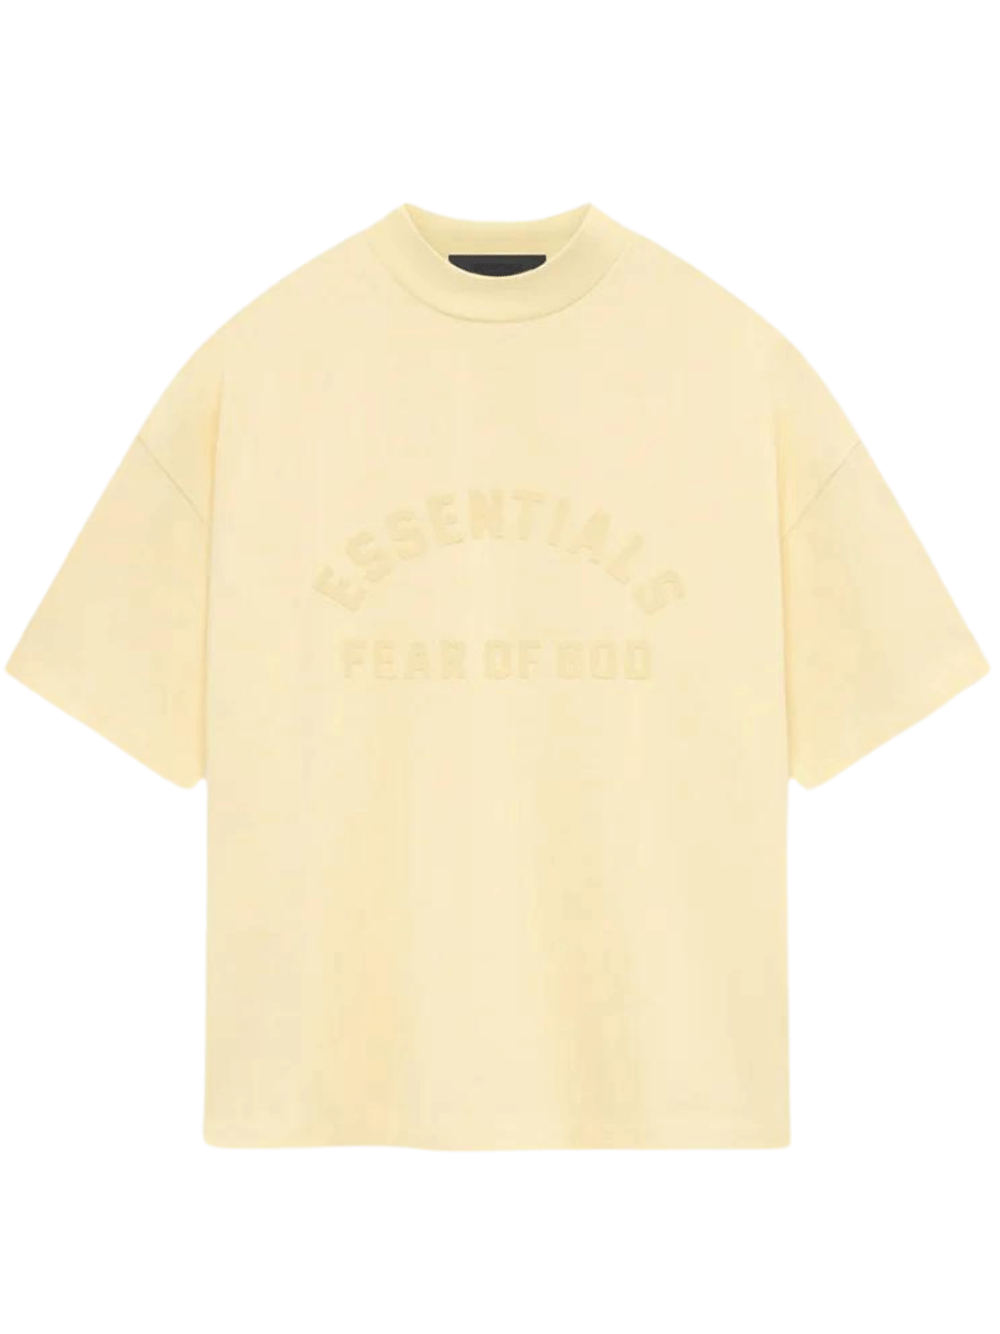 Fear-of-God-ESSENTIALS-Crewneck-T-Shirt-Yellow_1